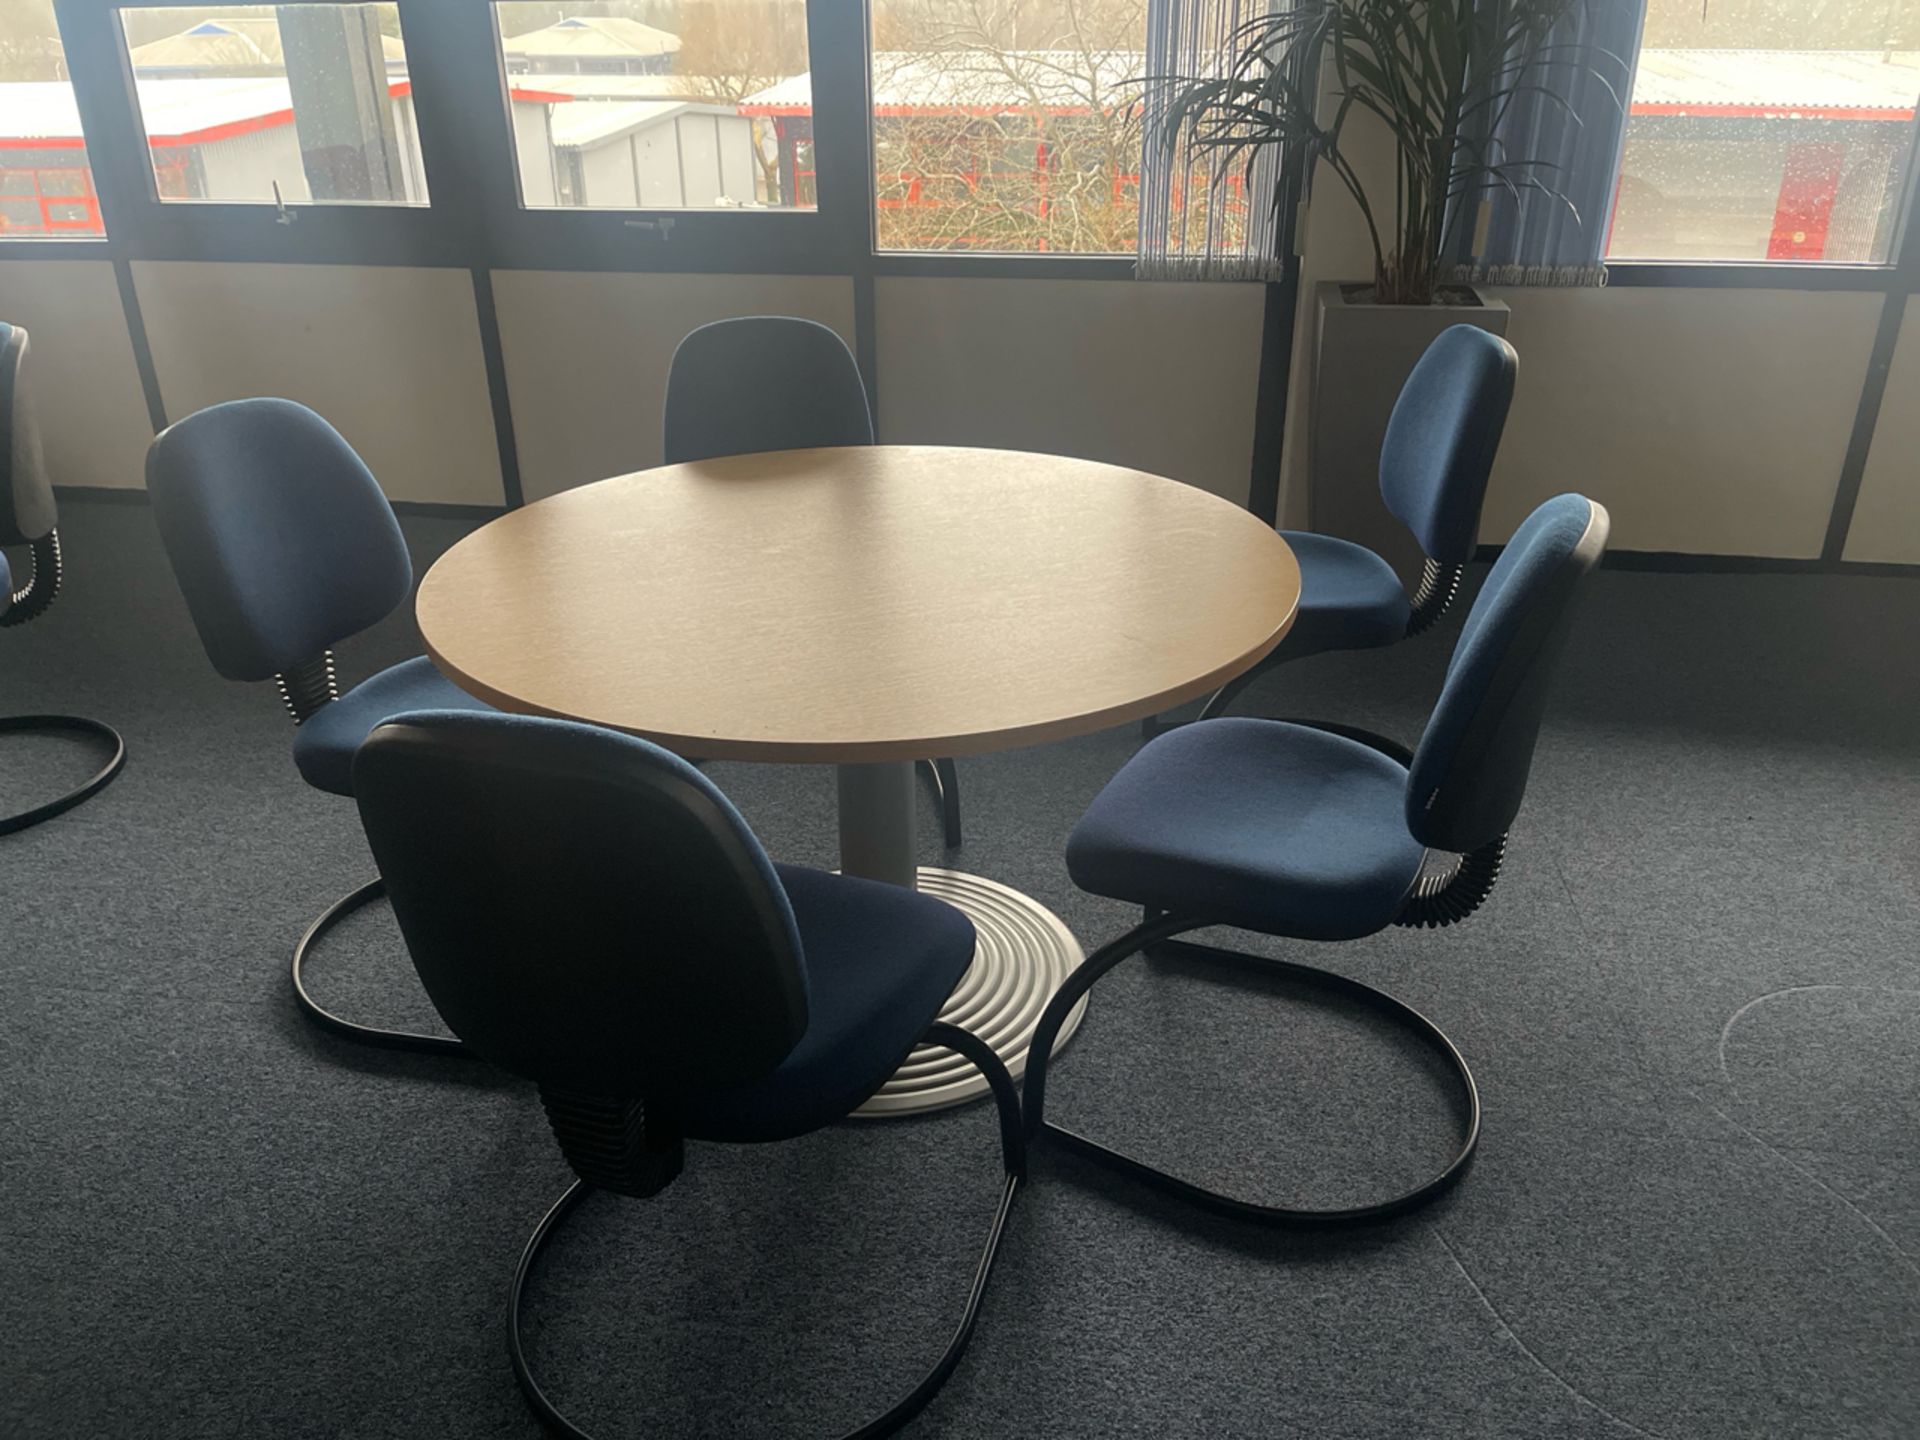 Circular Table x1 & Chairs x4